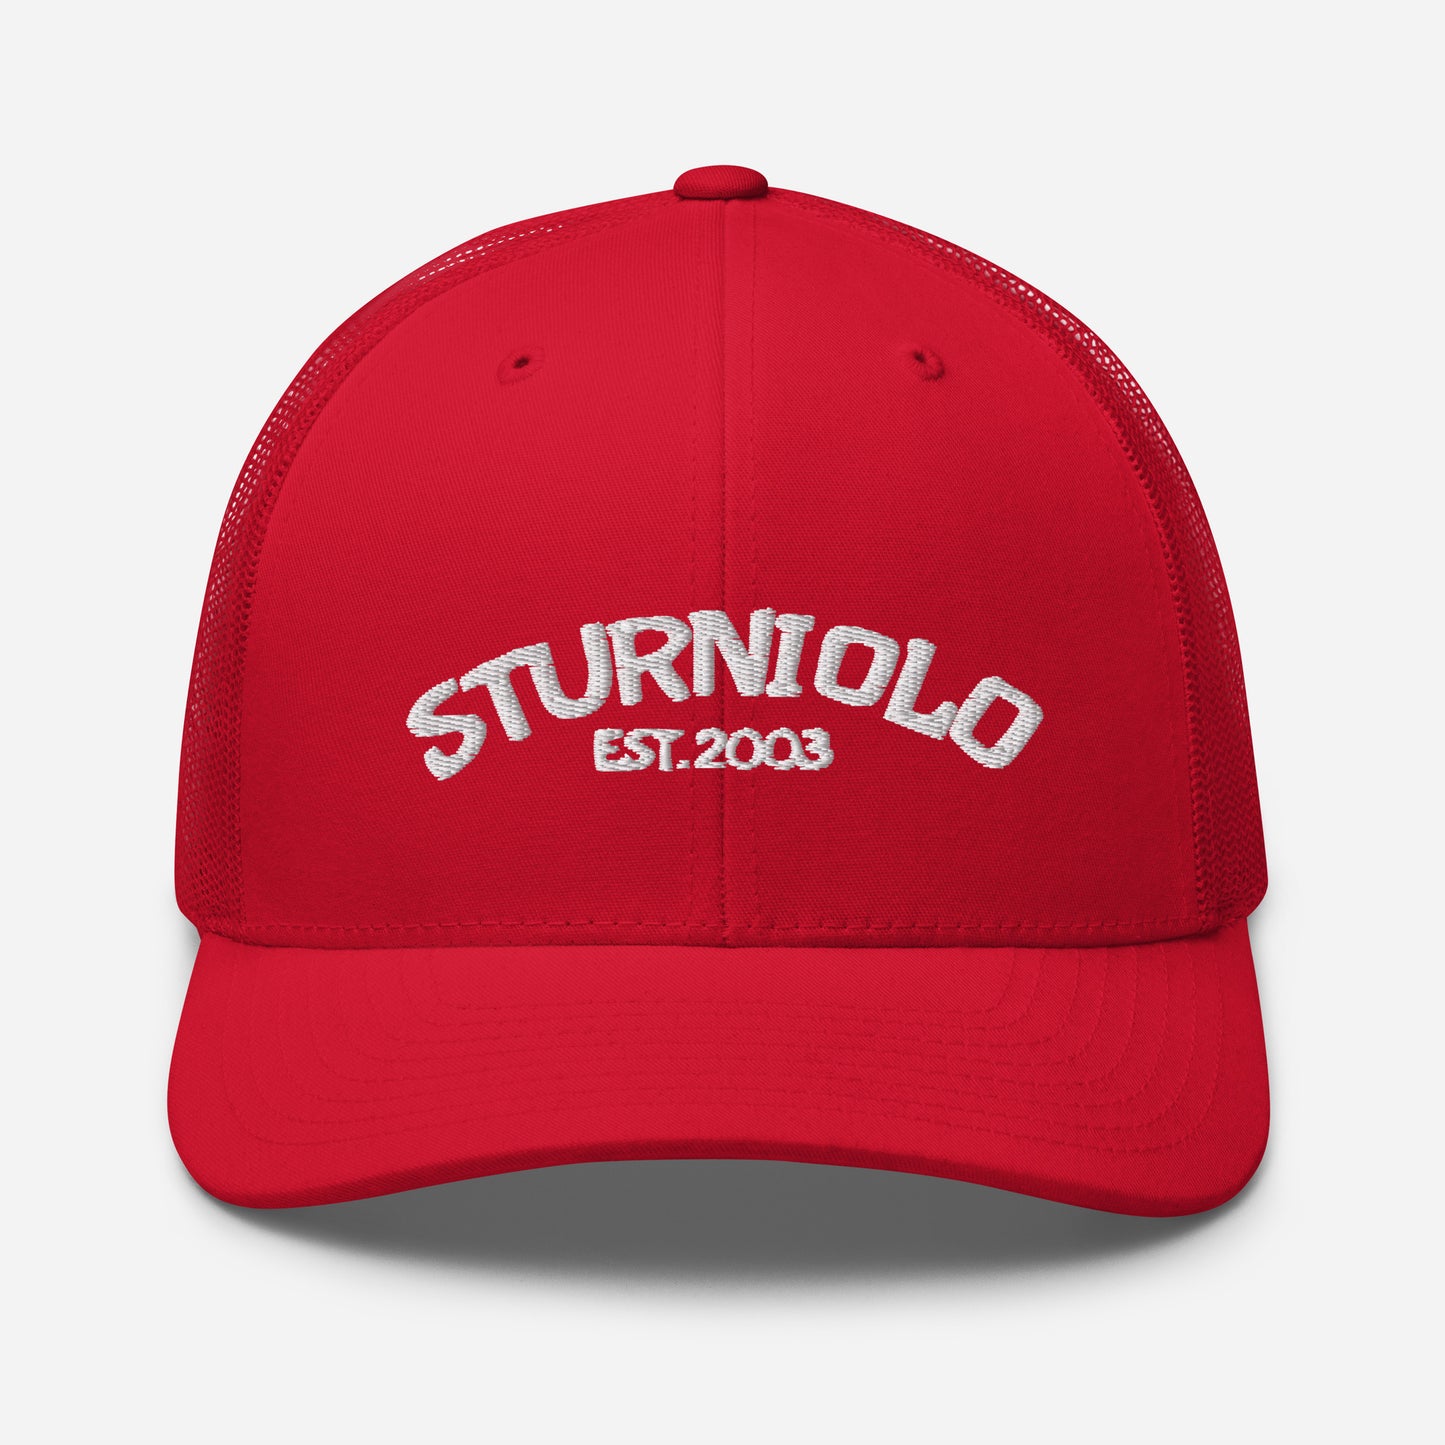 Sturniolo Triplets Trucker Cap